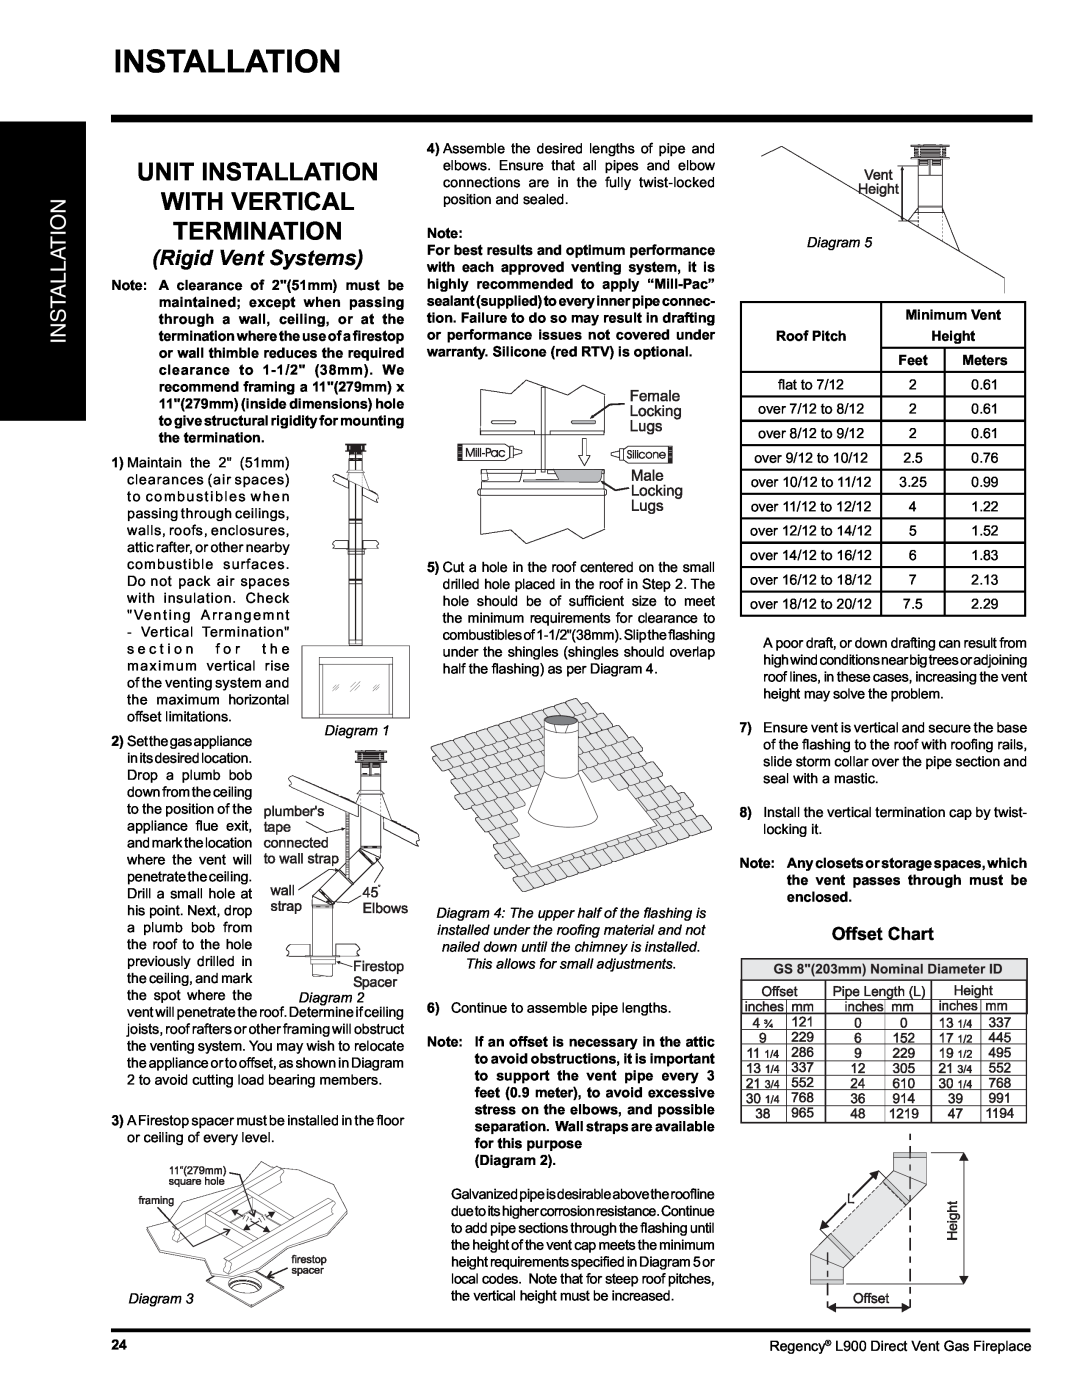 Regency L900-LP, L900-NG installation manual Unit Installation With Vertical Termination, Rigid Vent Systems, Diagram 